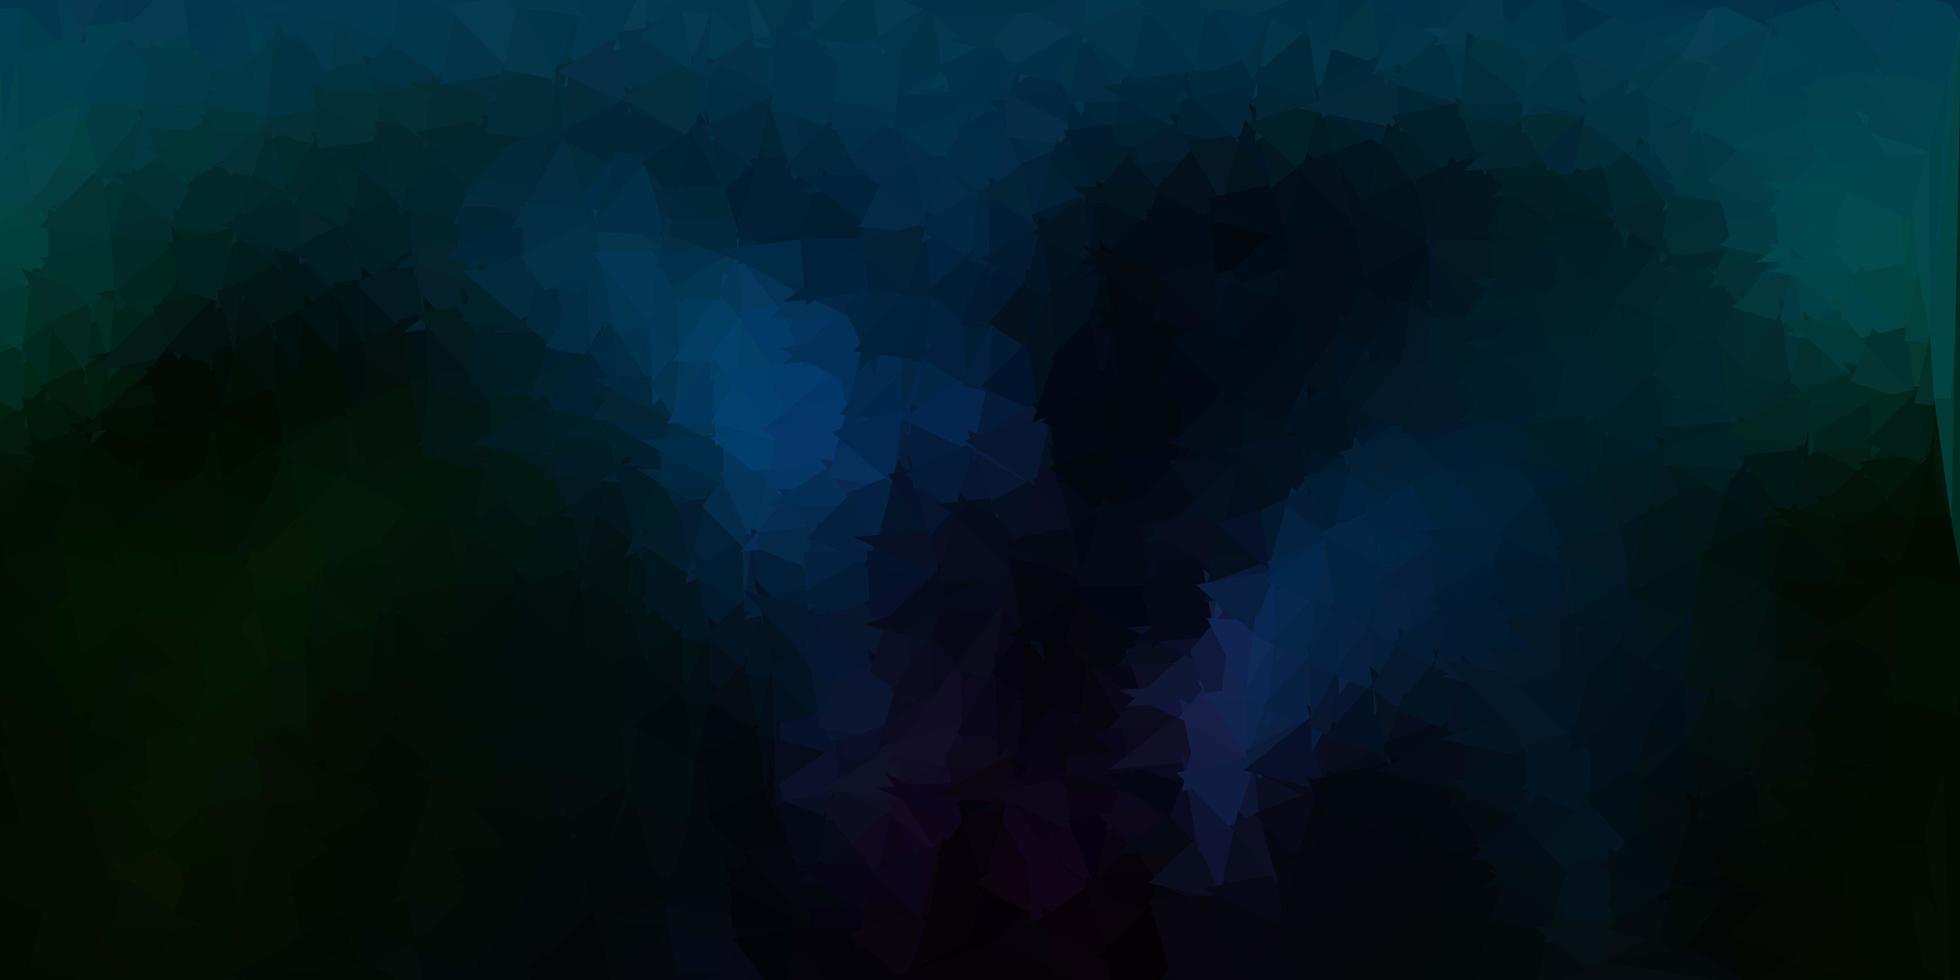 donkerblauwe, groene vector abstracte driehoeksachtergrond.